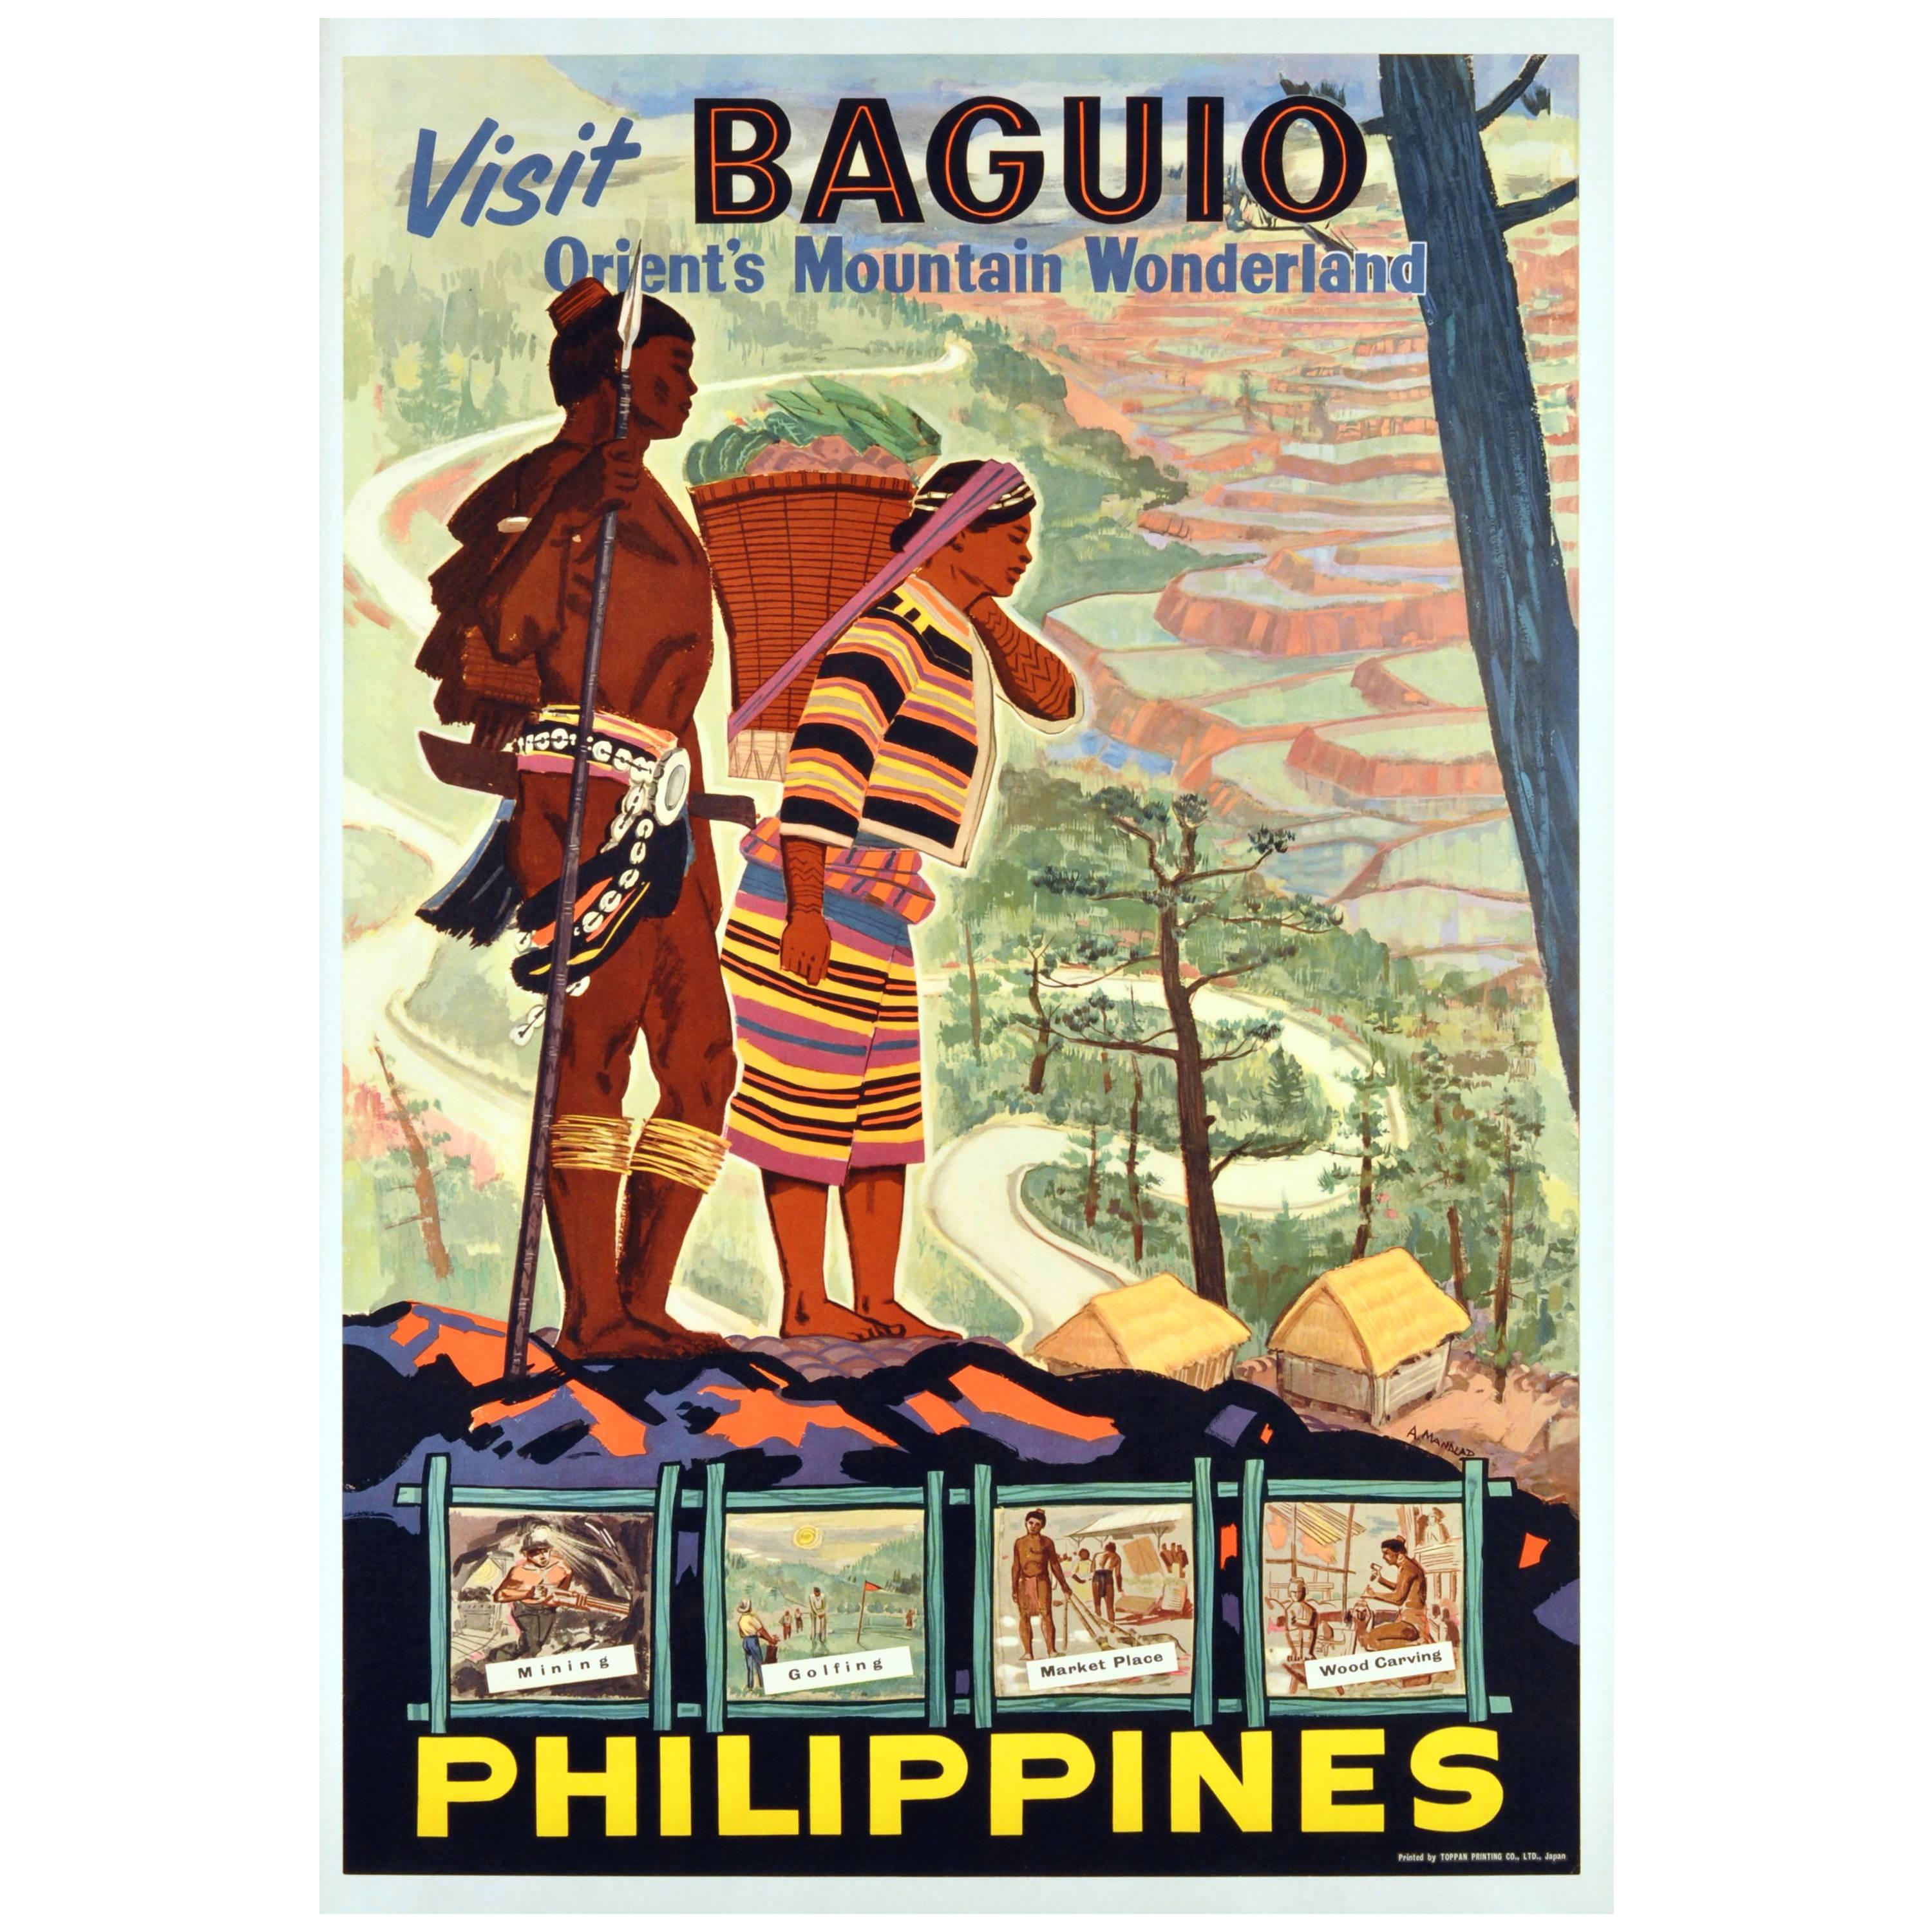 Original Vintage Poster - Visit Baguio Philippines Orient's Mountain Wonderland